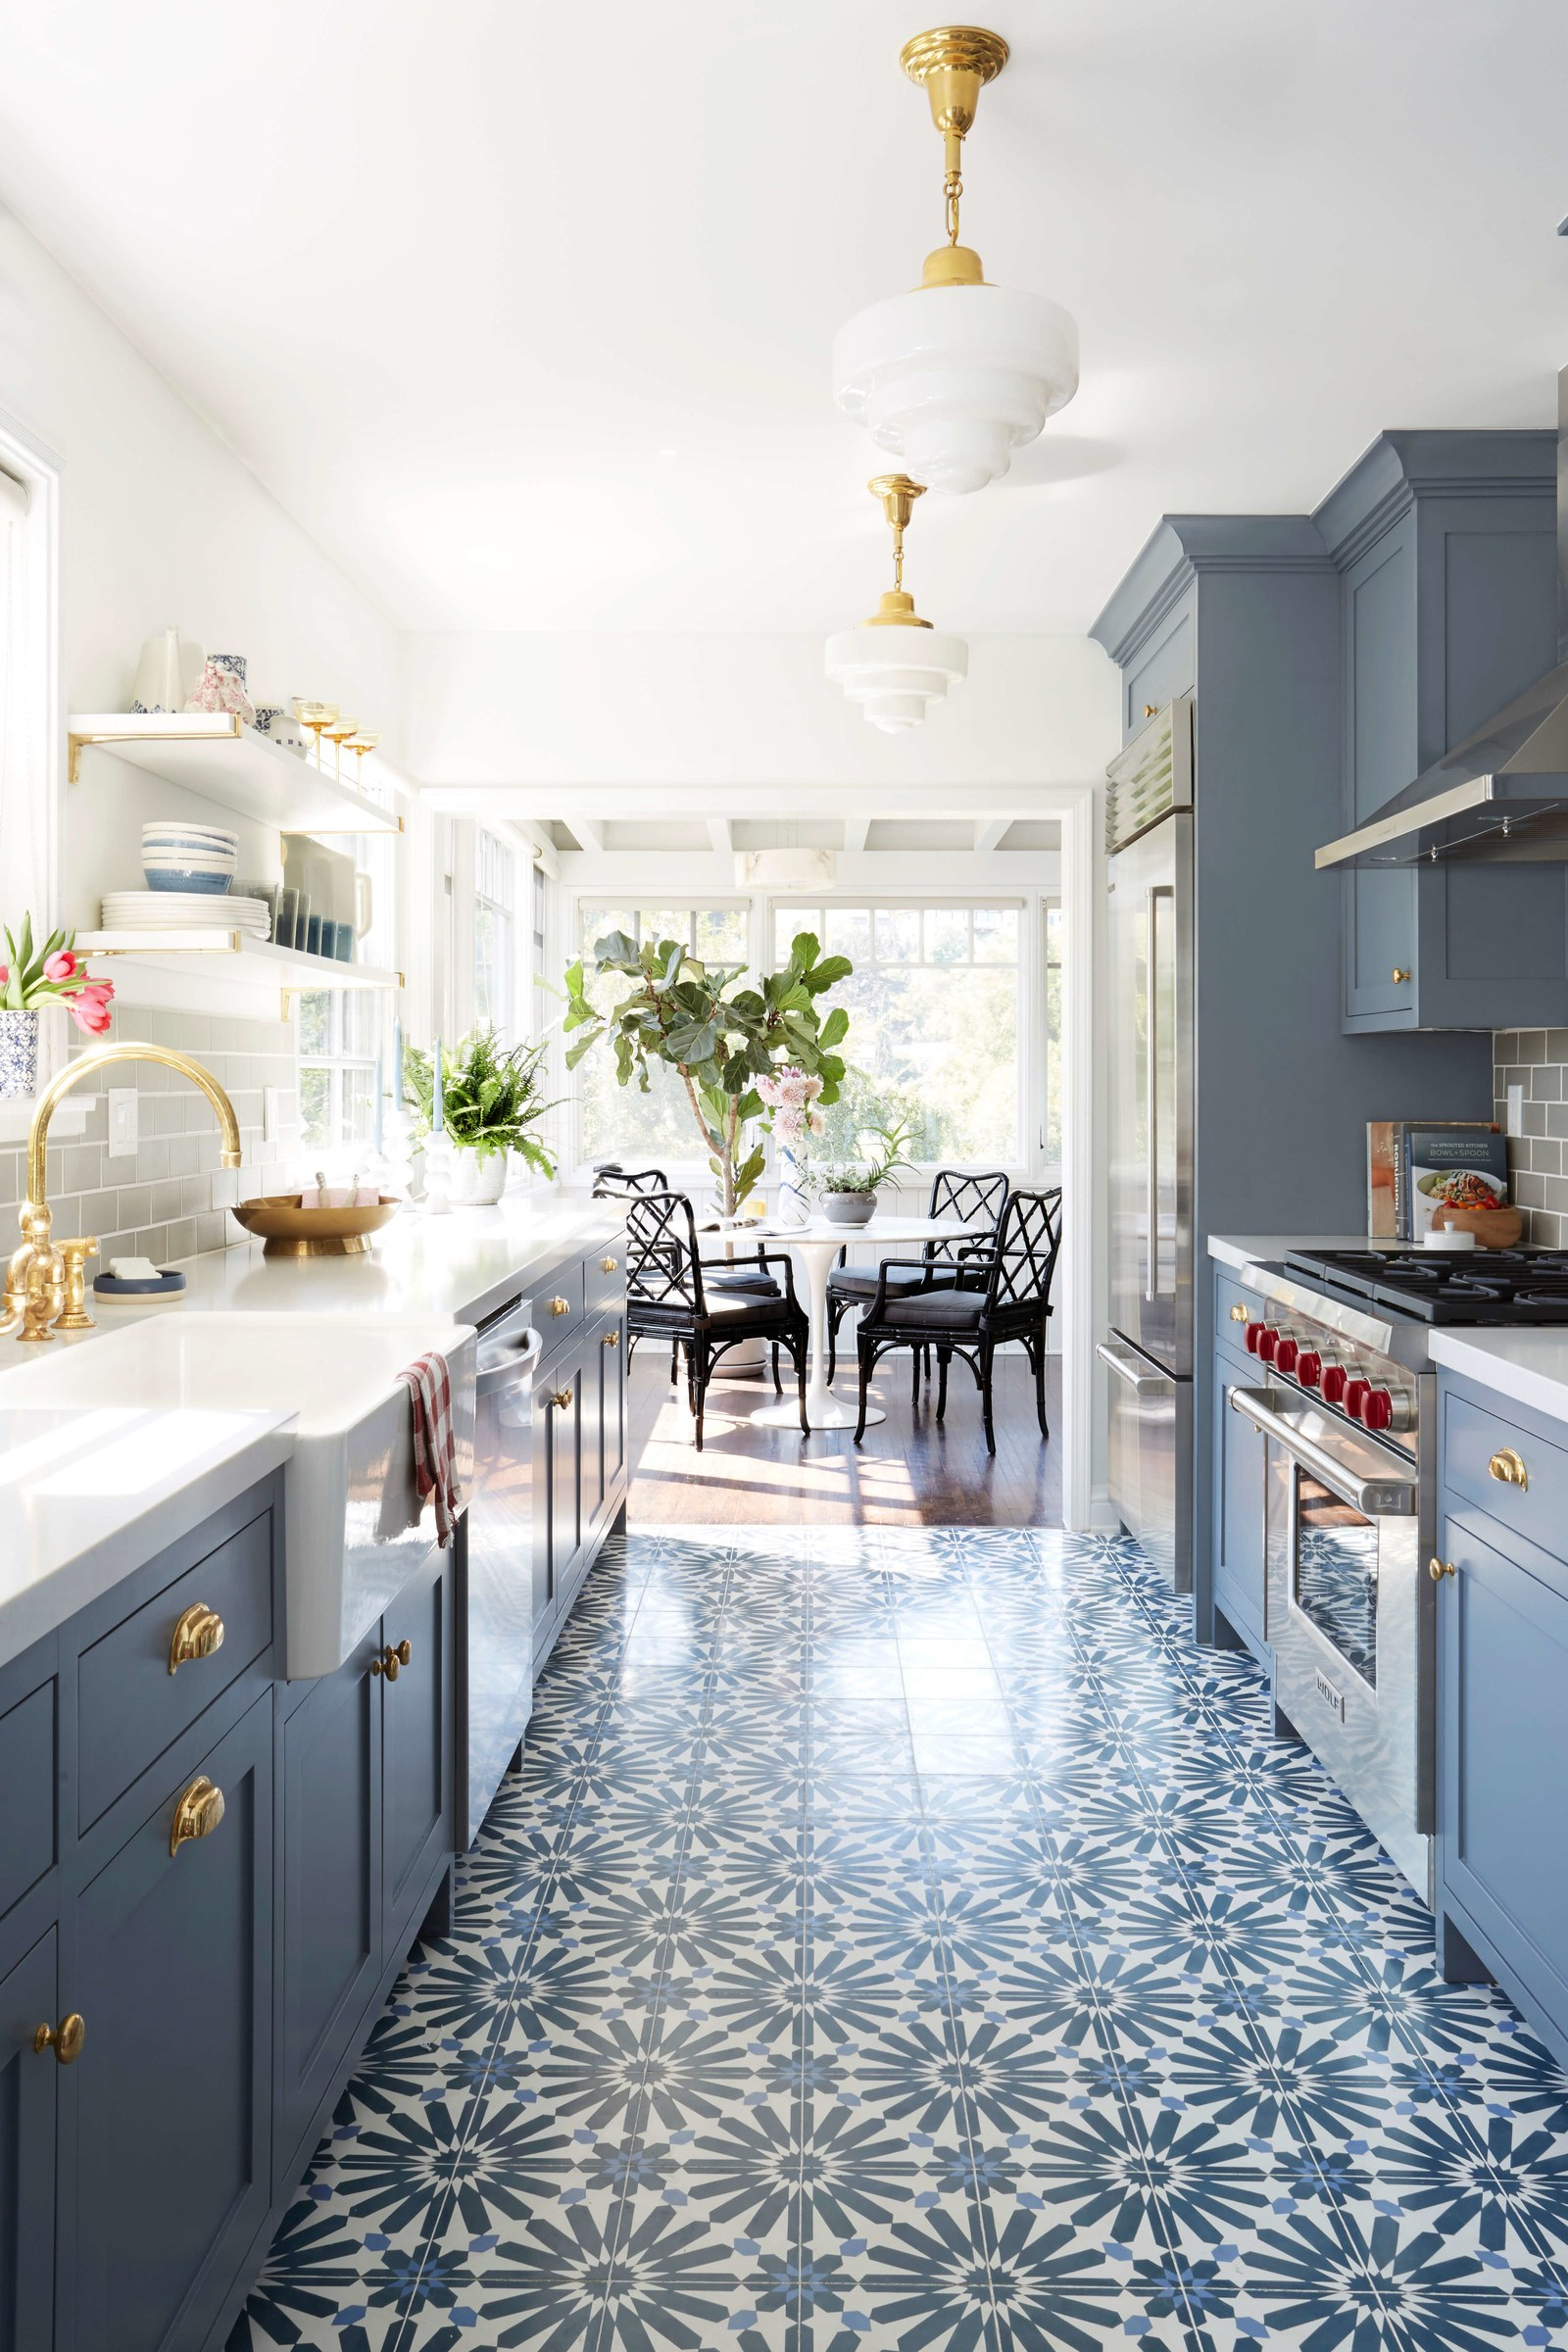 10 Elegant Kitchen Ideas For A Small Kitchen small galley kitchen ideas design inspiration architectural digest 2023